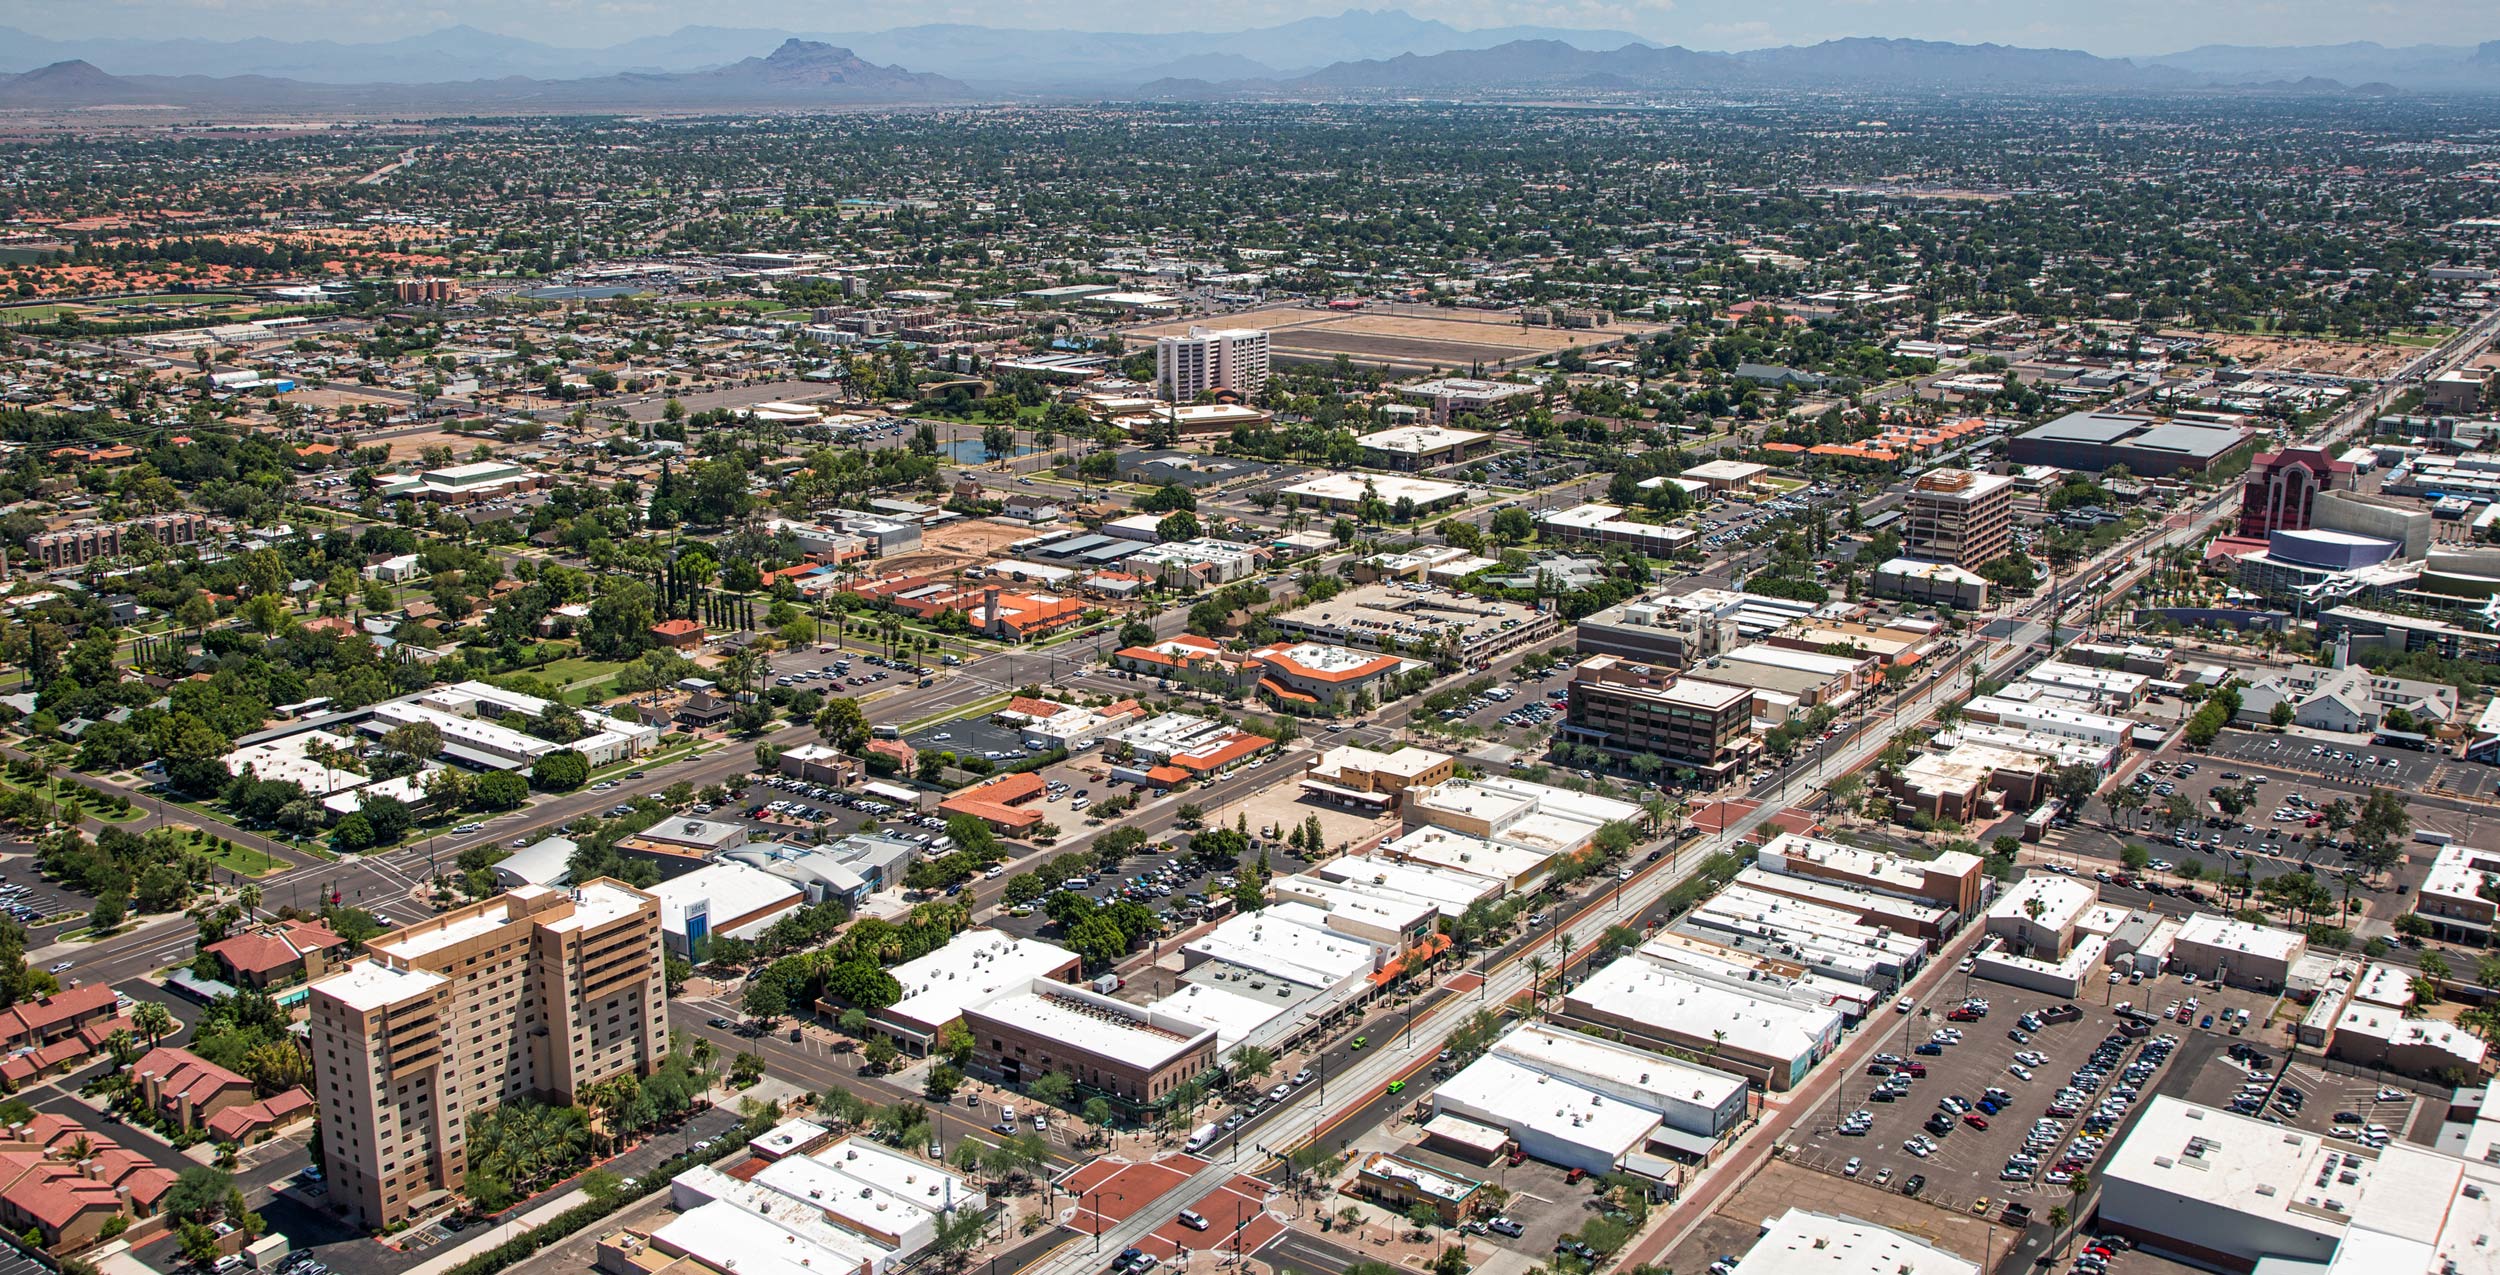 City View of Mesa, AZ